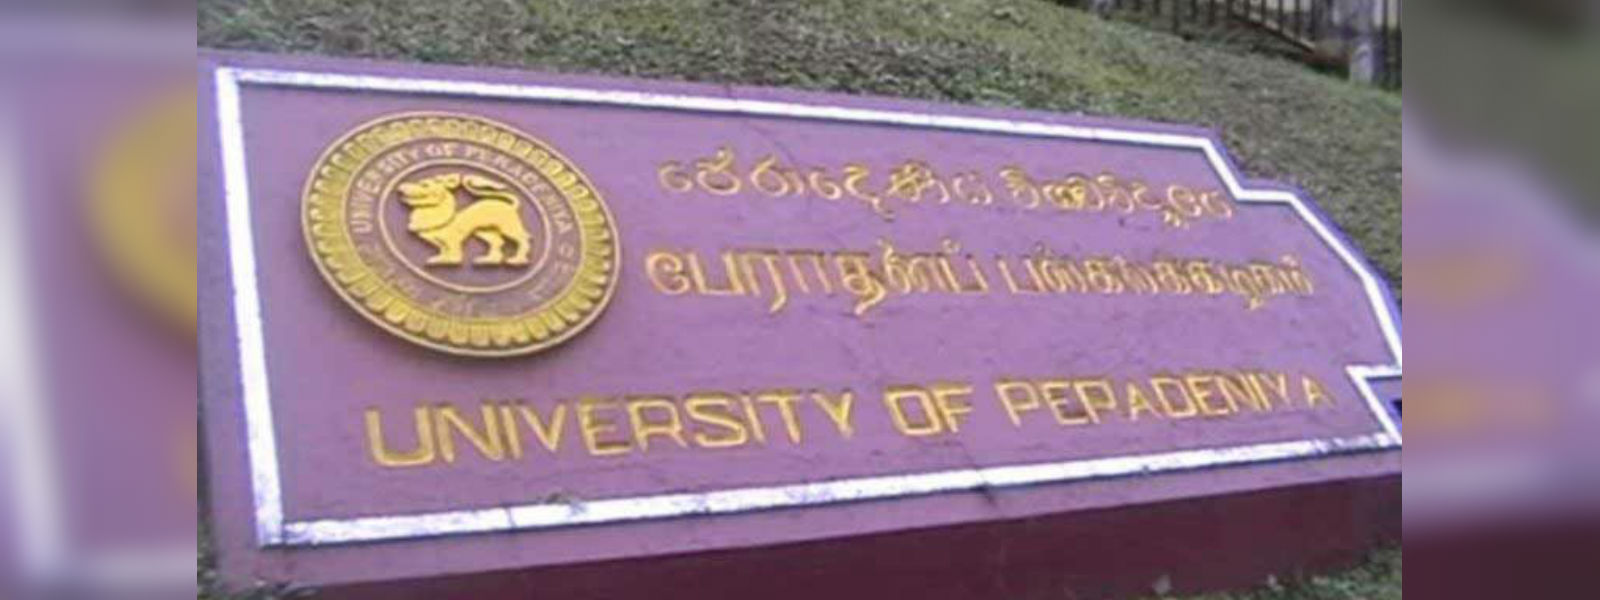 Three faculties of Pera Uni opens tomorrow 